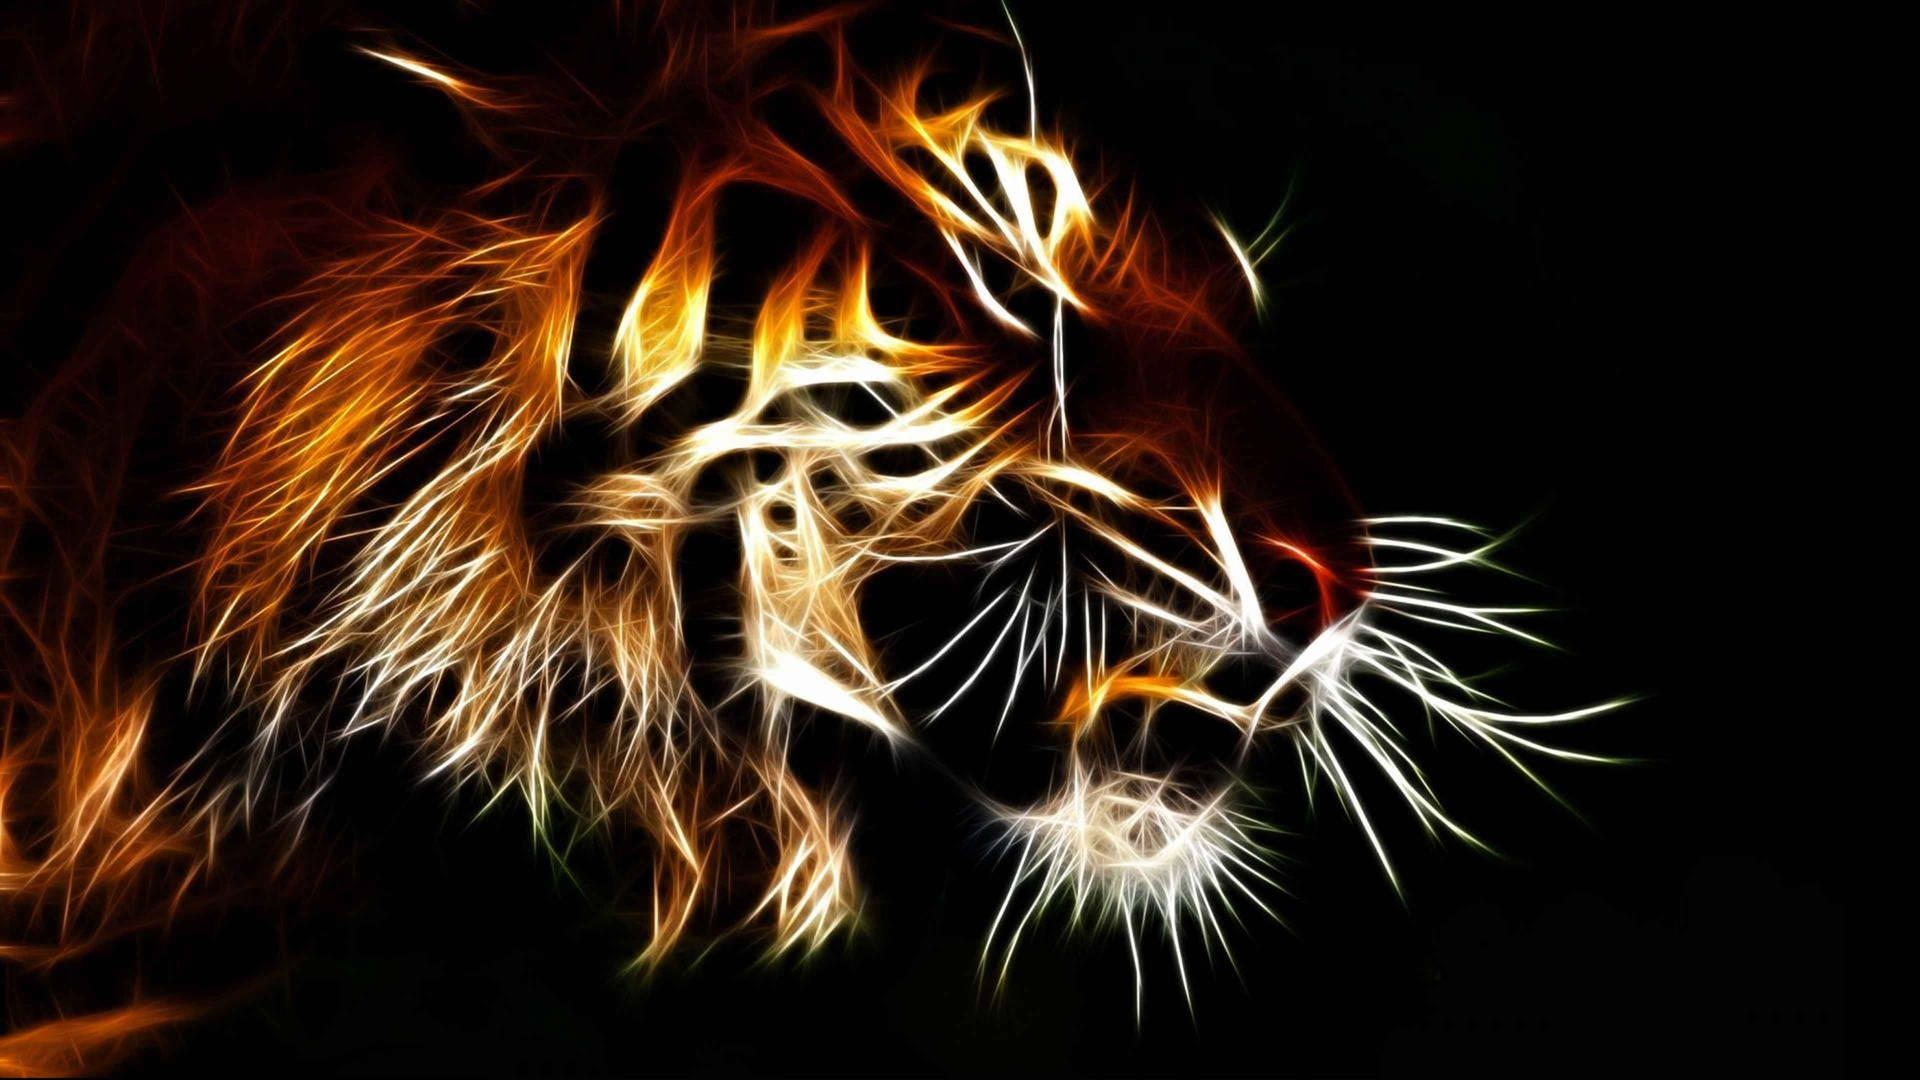 Cool Abstract Tiger Digital Art